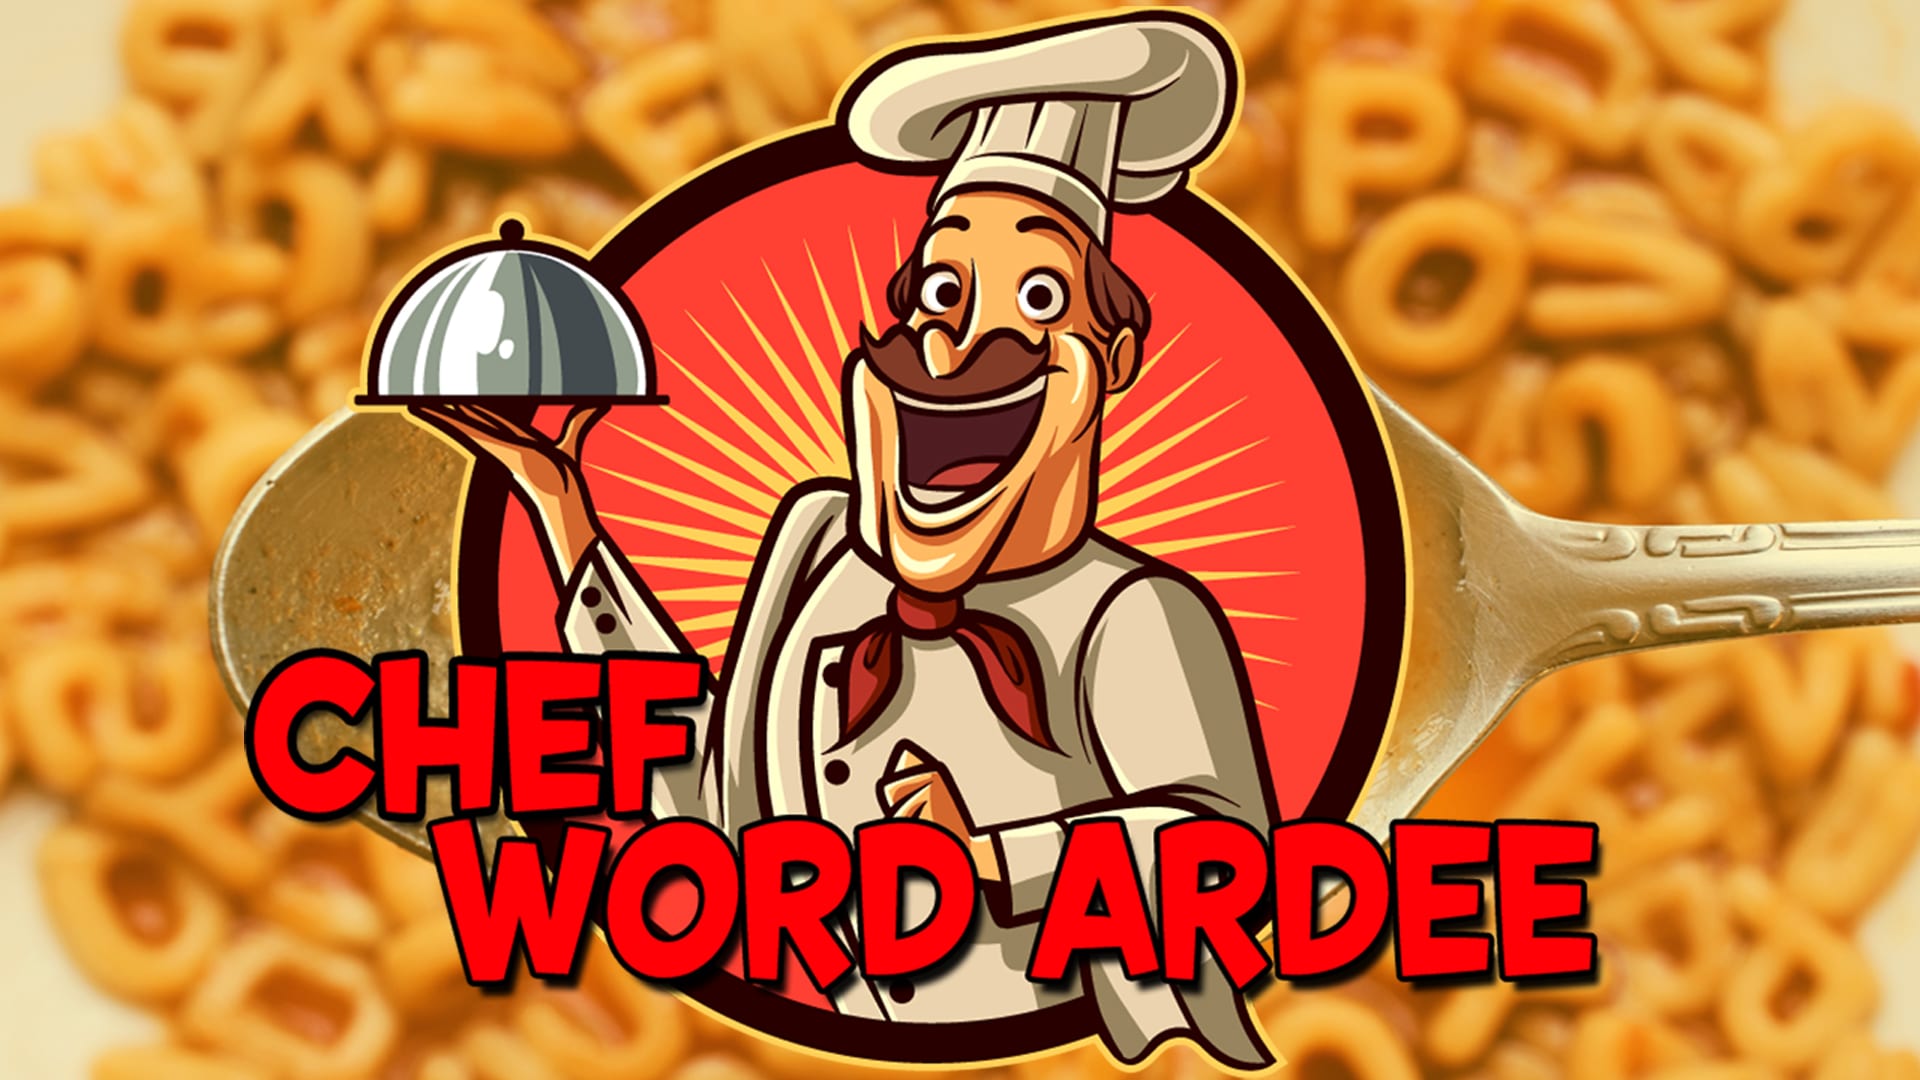 Chef Word Ardee